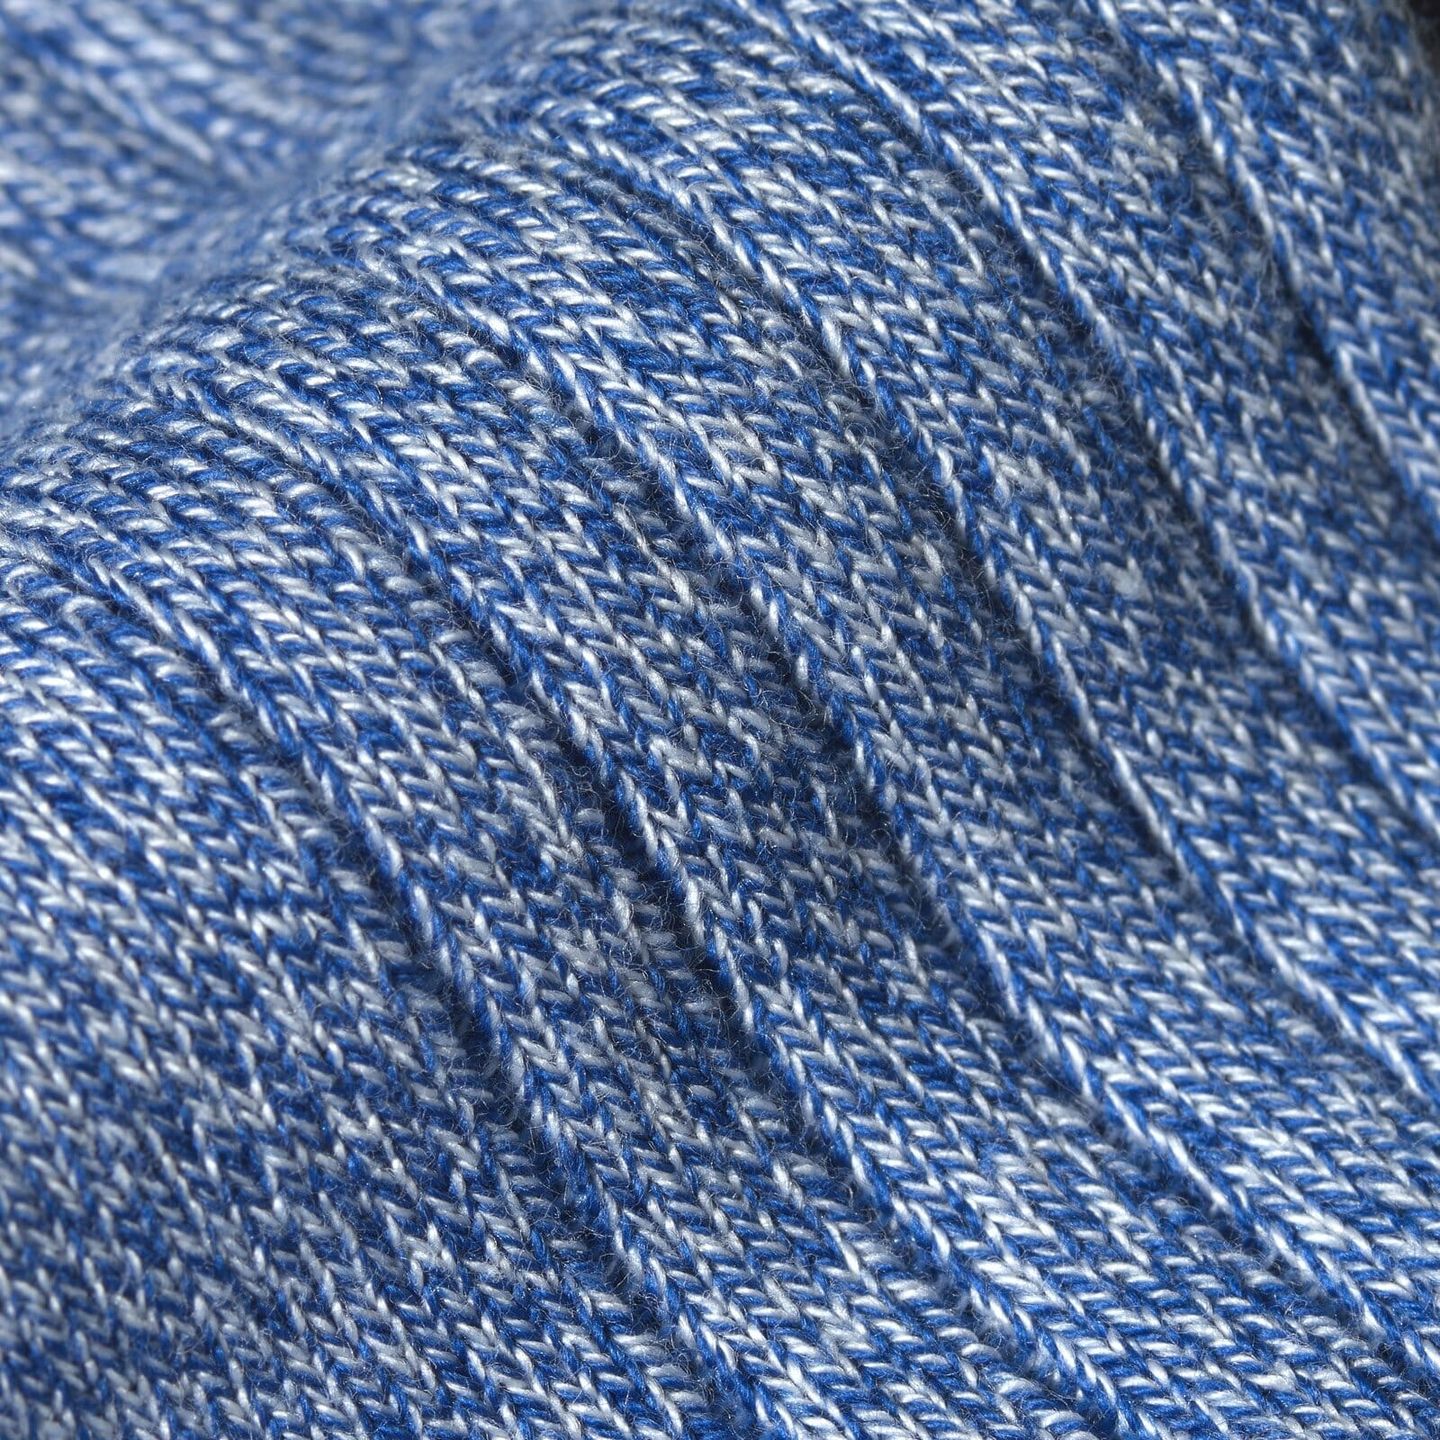 Close up of the Marl denim blue socks